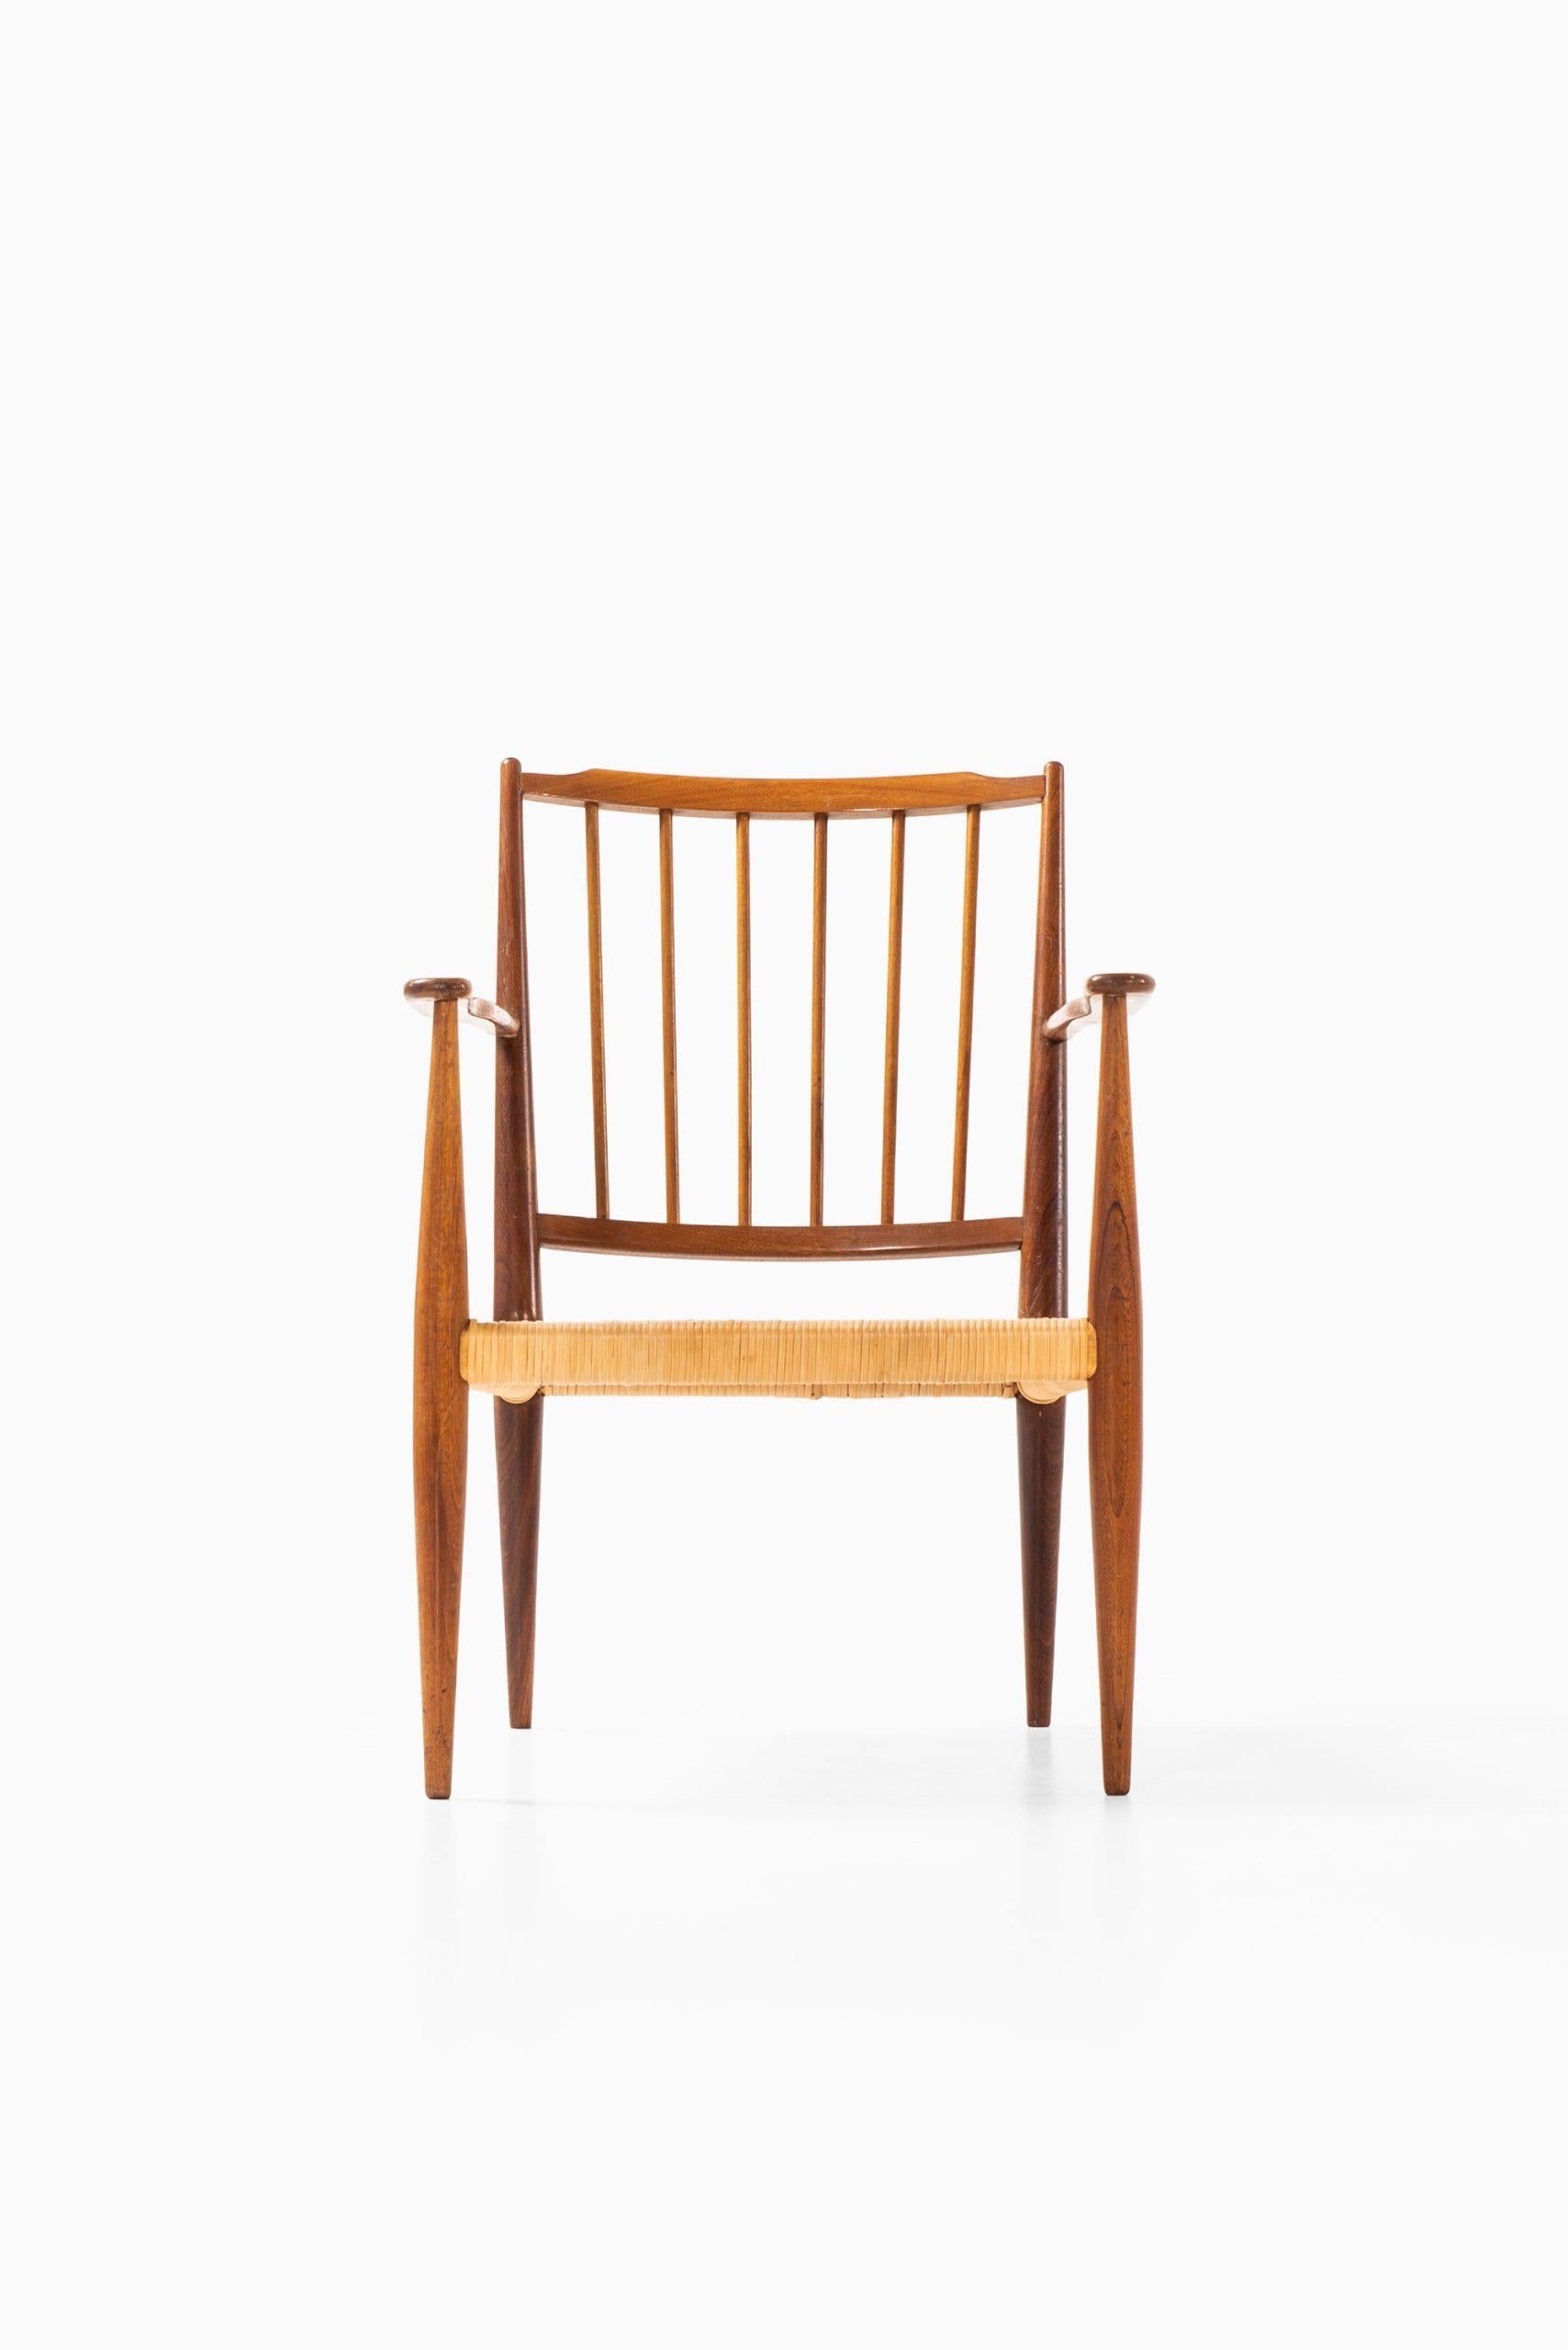 Very rare easy chair model 508 designed by Josef Frank. Produced by Svenskt Tenn in Sweden.